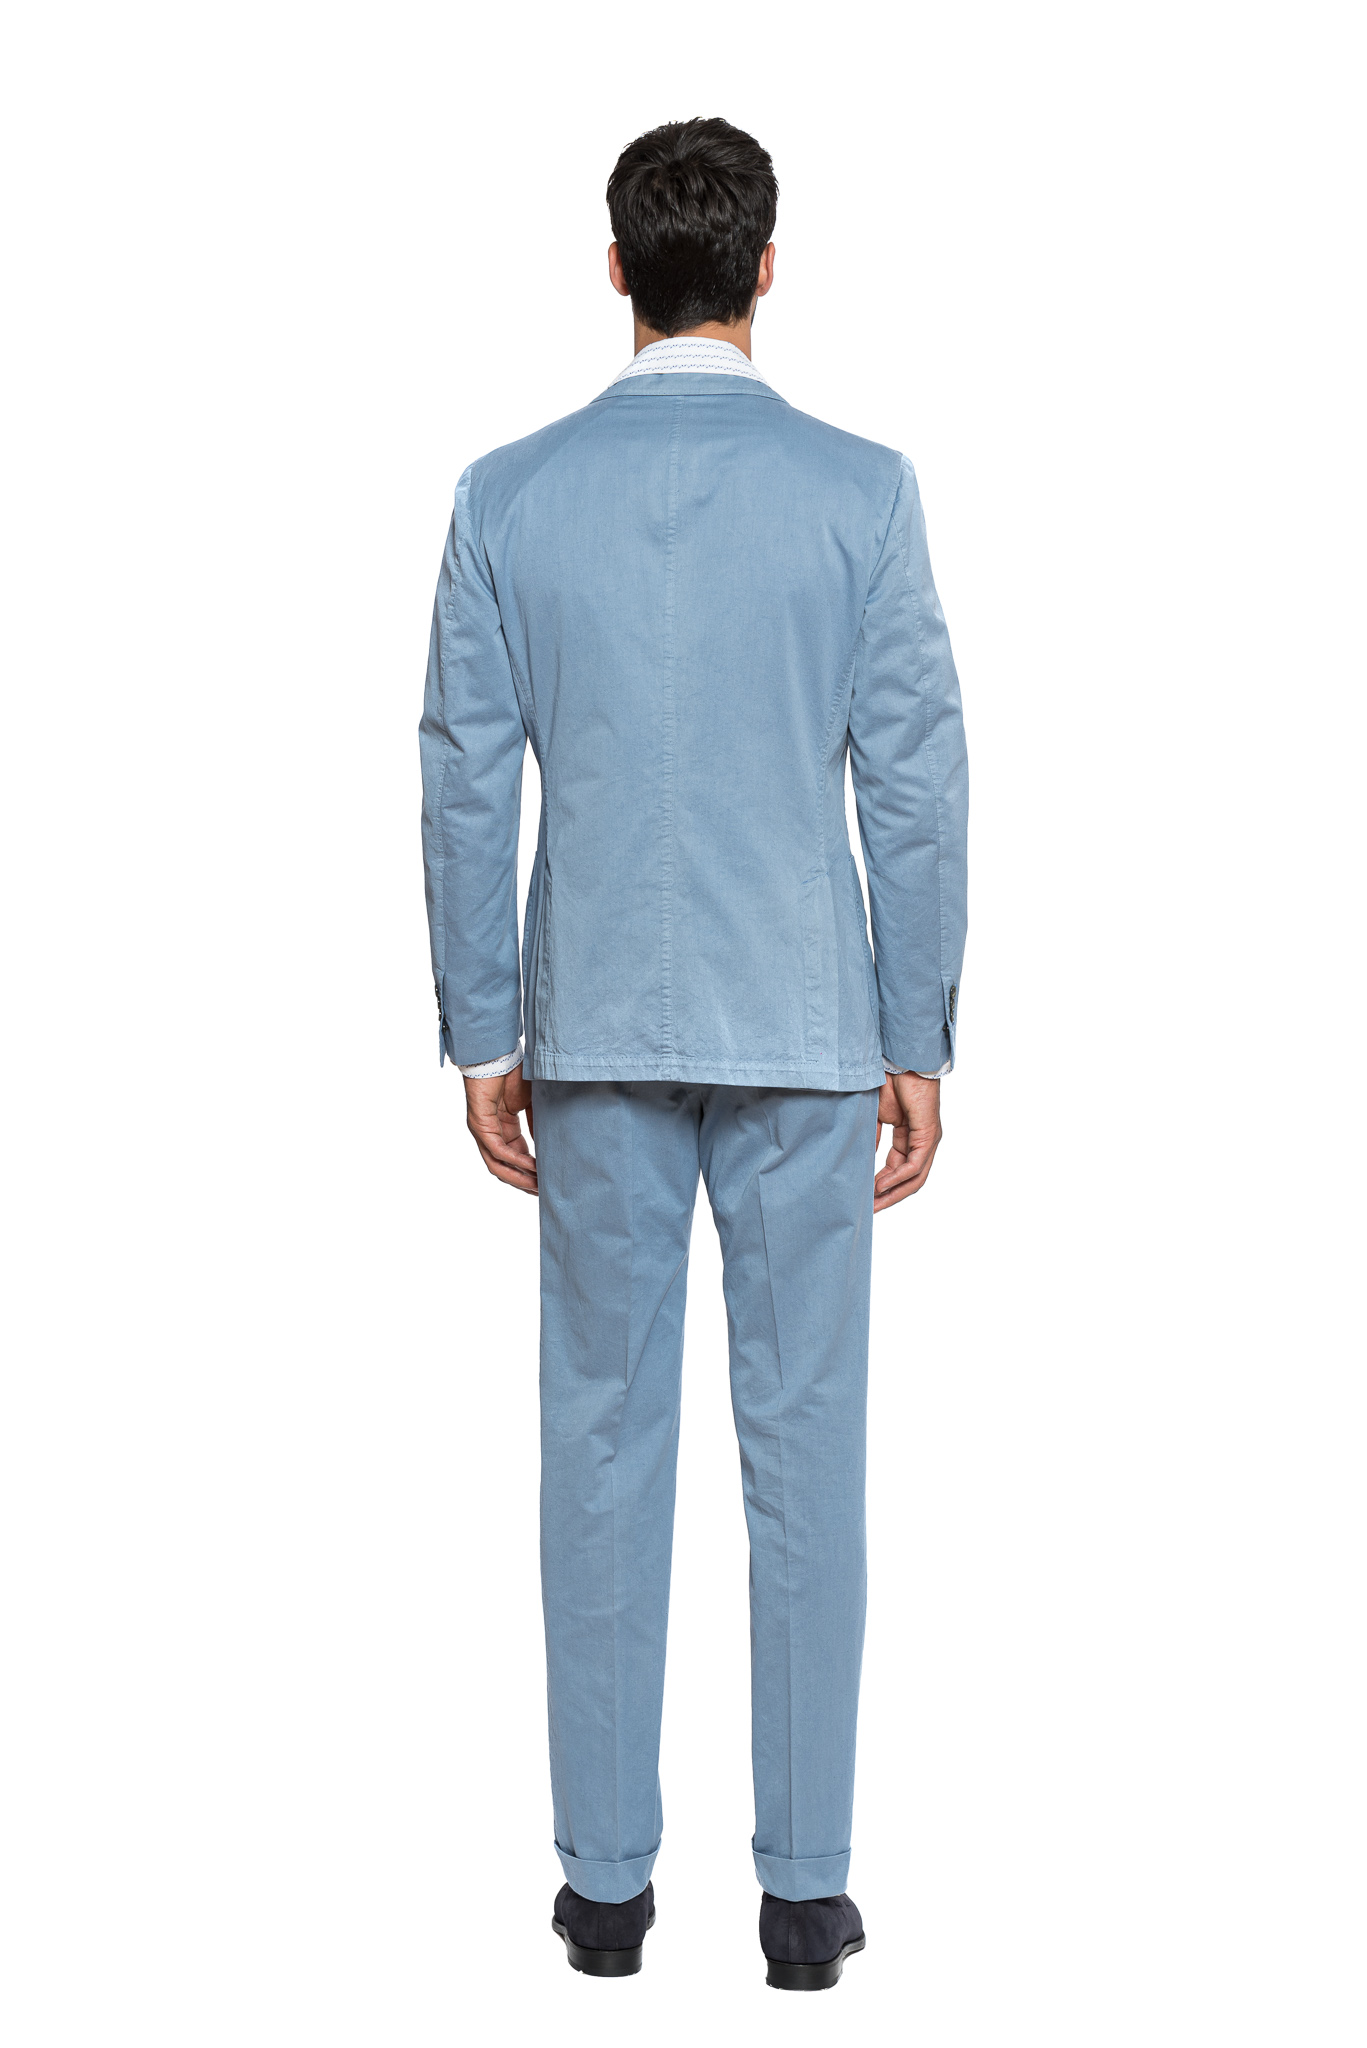 BELVEST Dark Blue Ultralight Cotton Solid Suit 40 US 50 EU  8R Slim Fit 